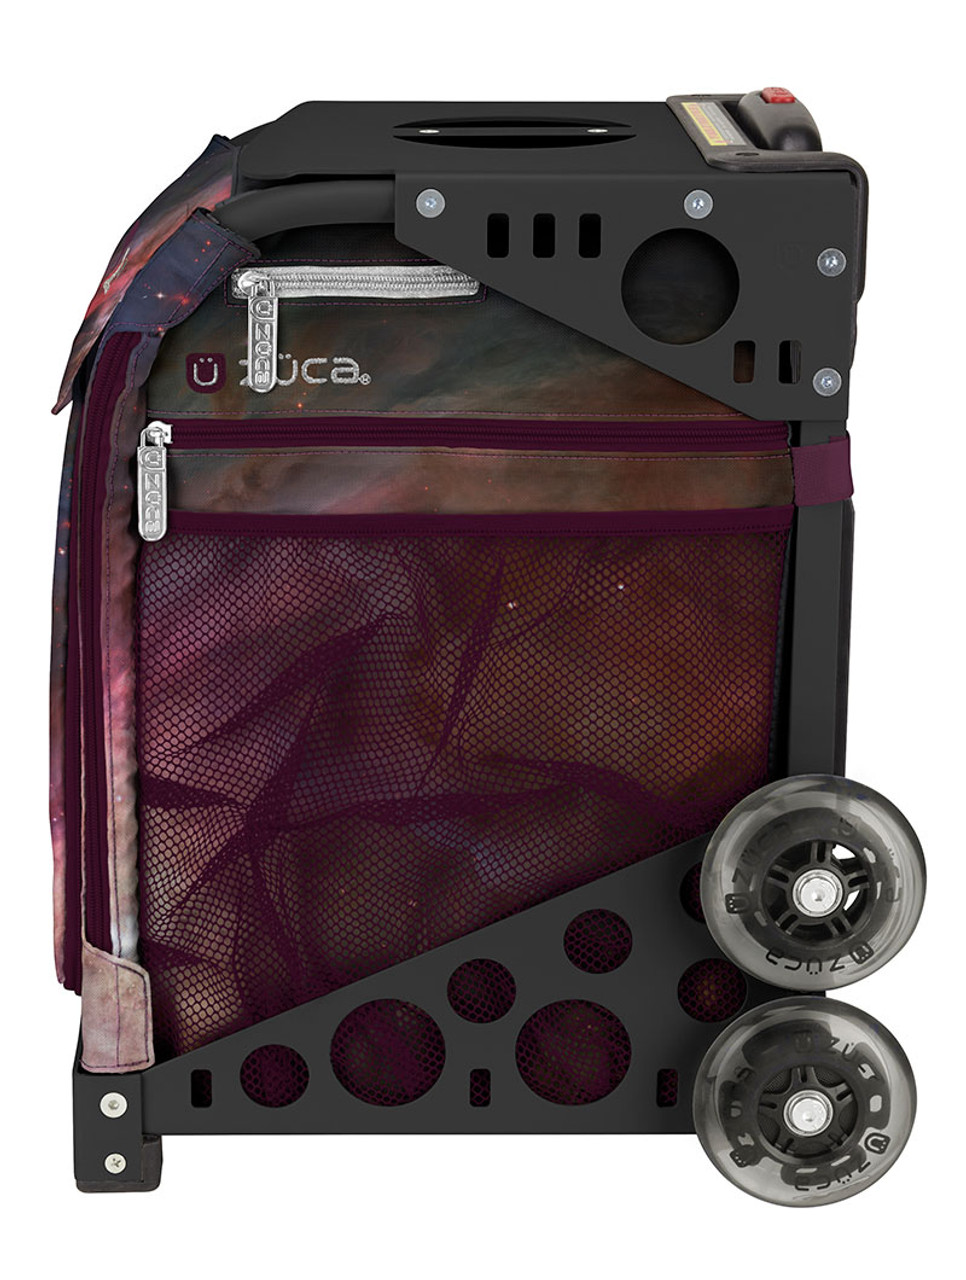 Zuca Explosion bag + FREE Zuca Utility Pouch Combo Set - One